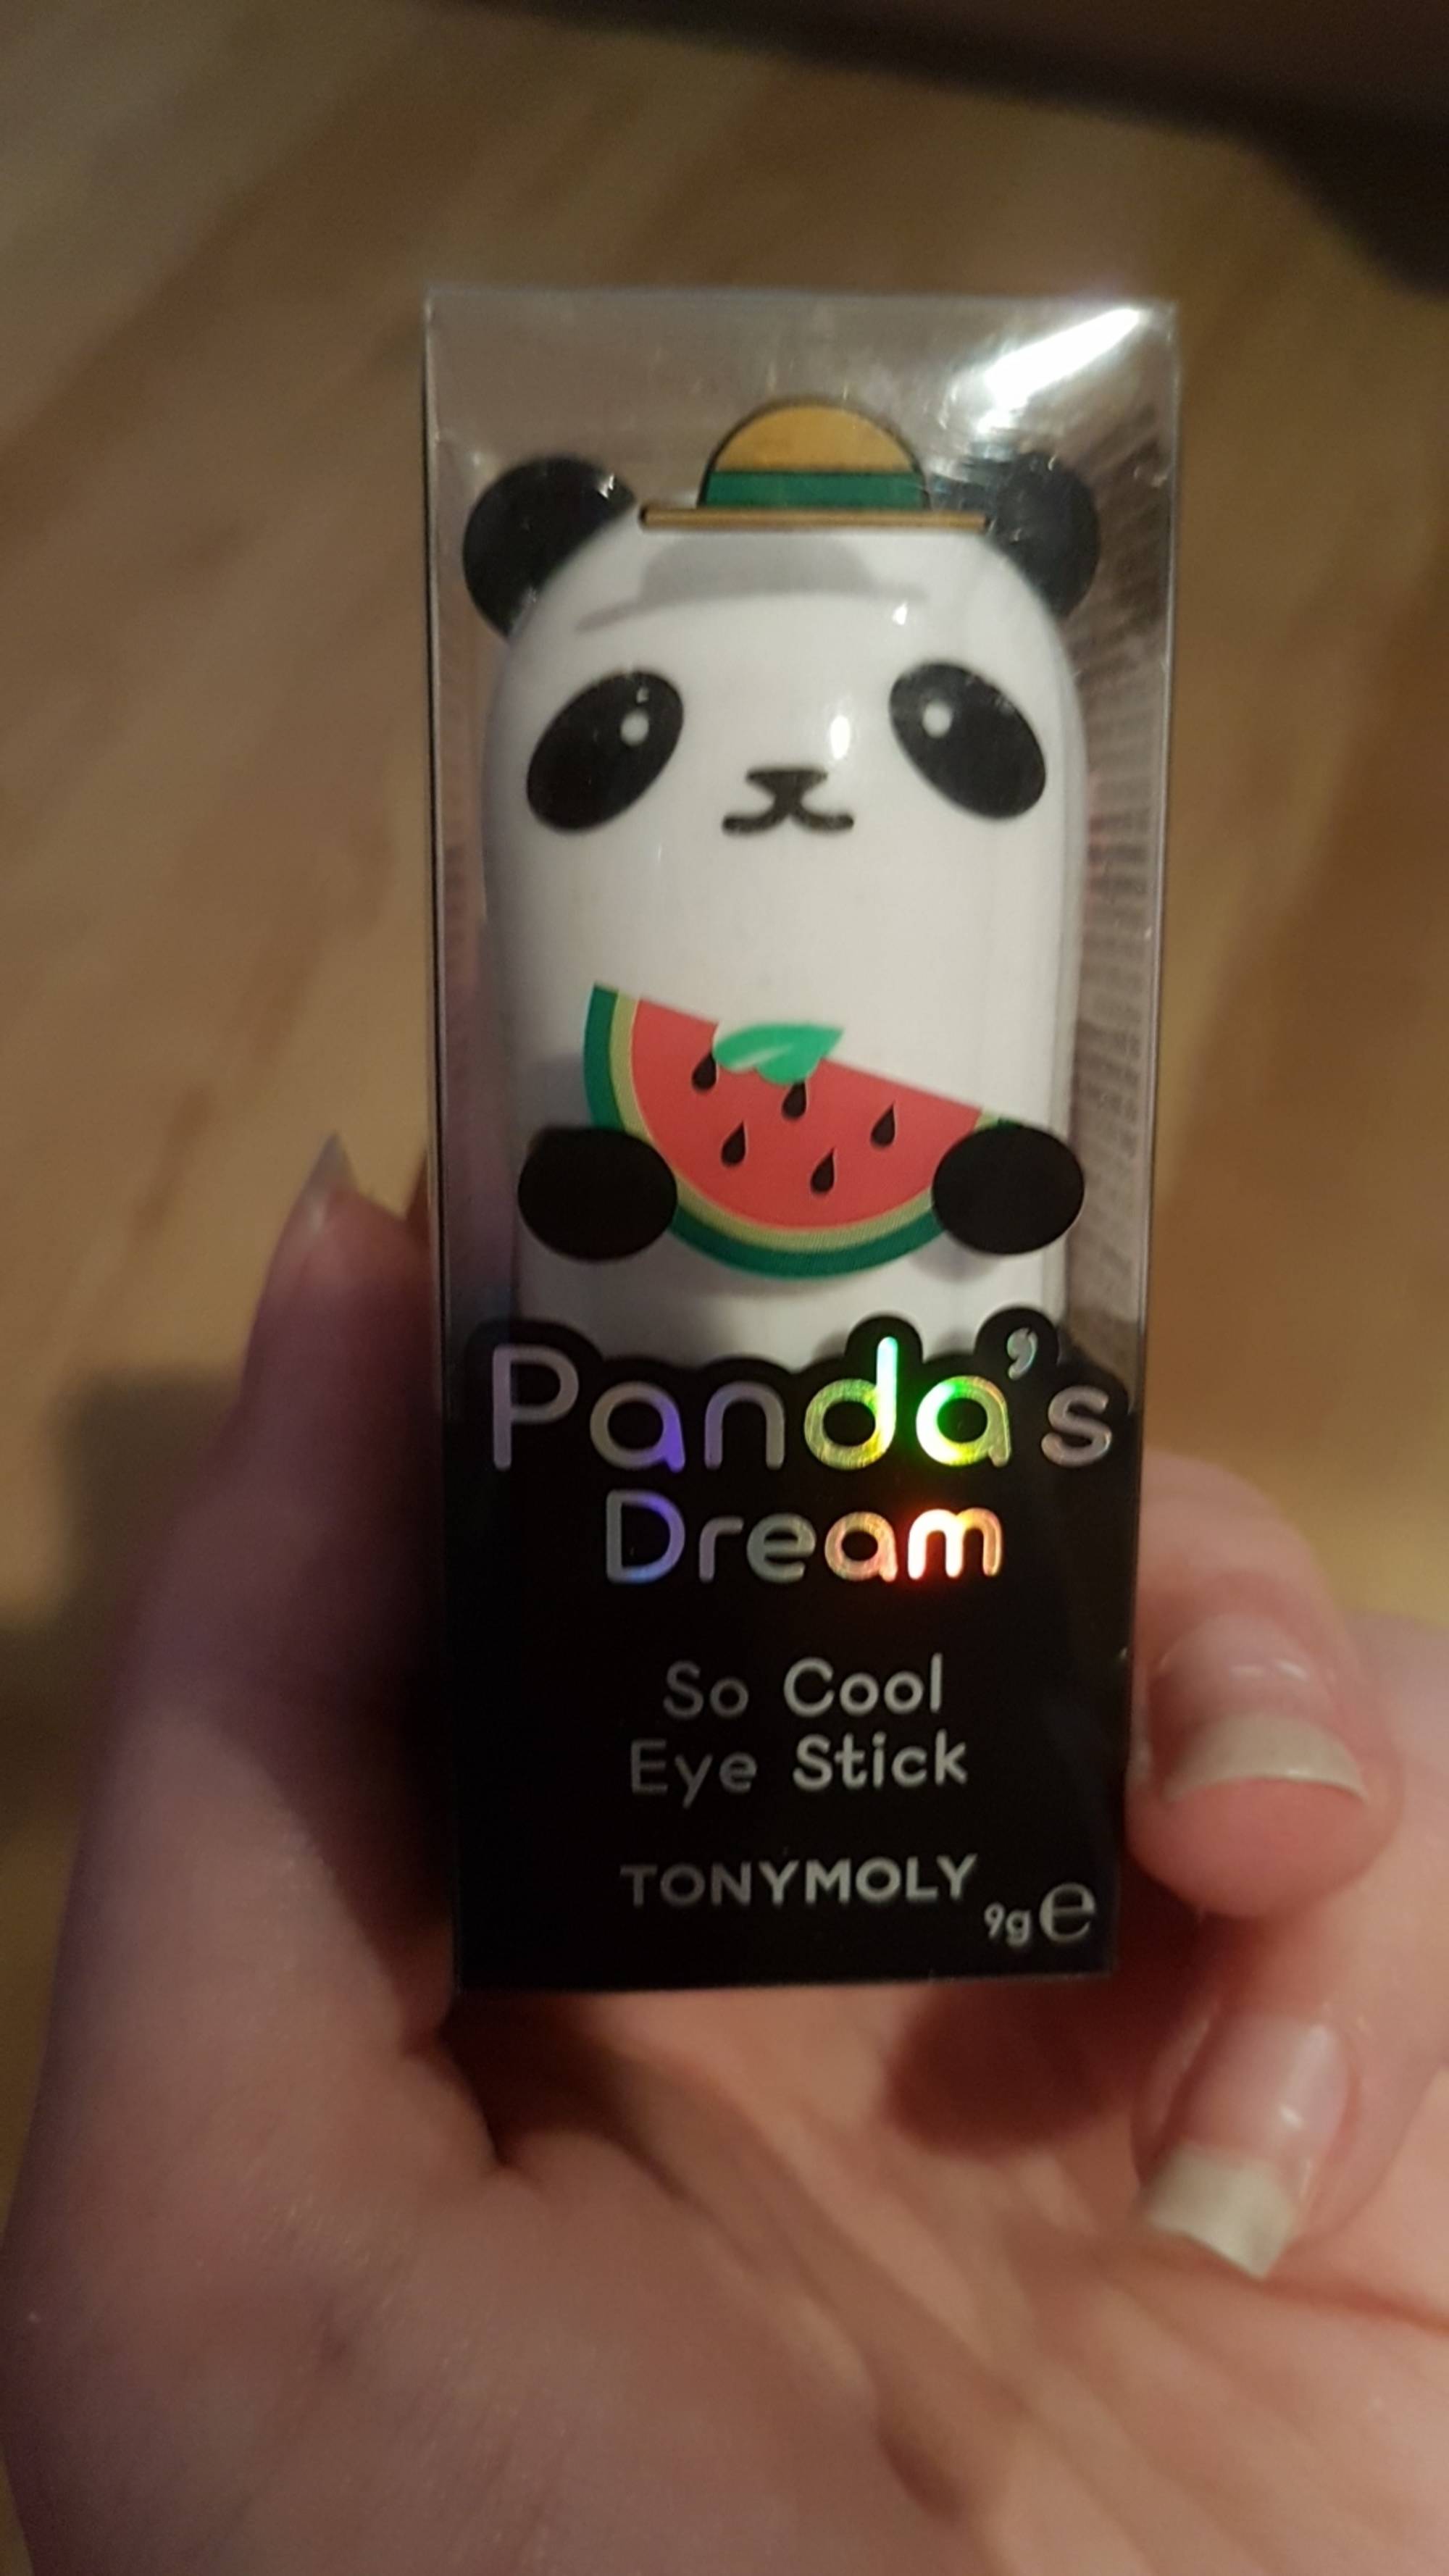 TONYMOLY - Panda's dream - So cool eye stick